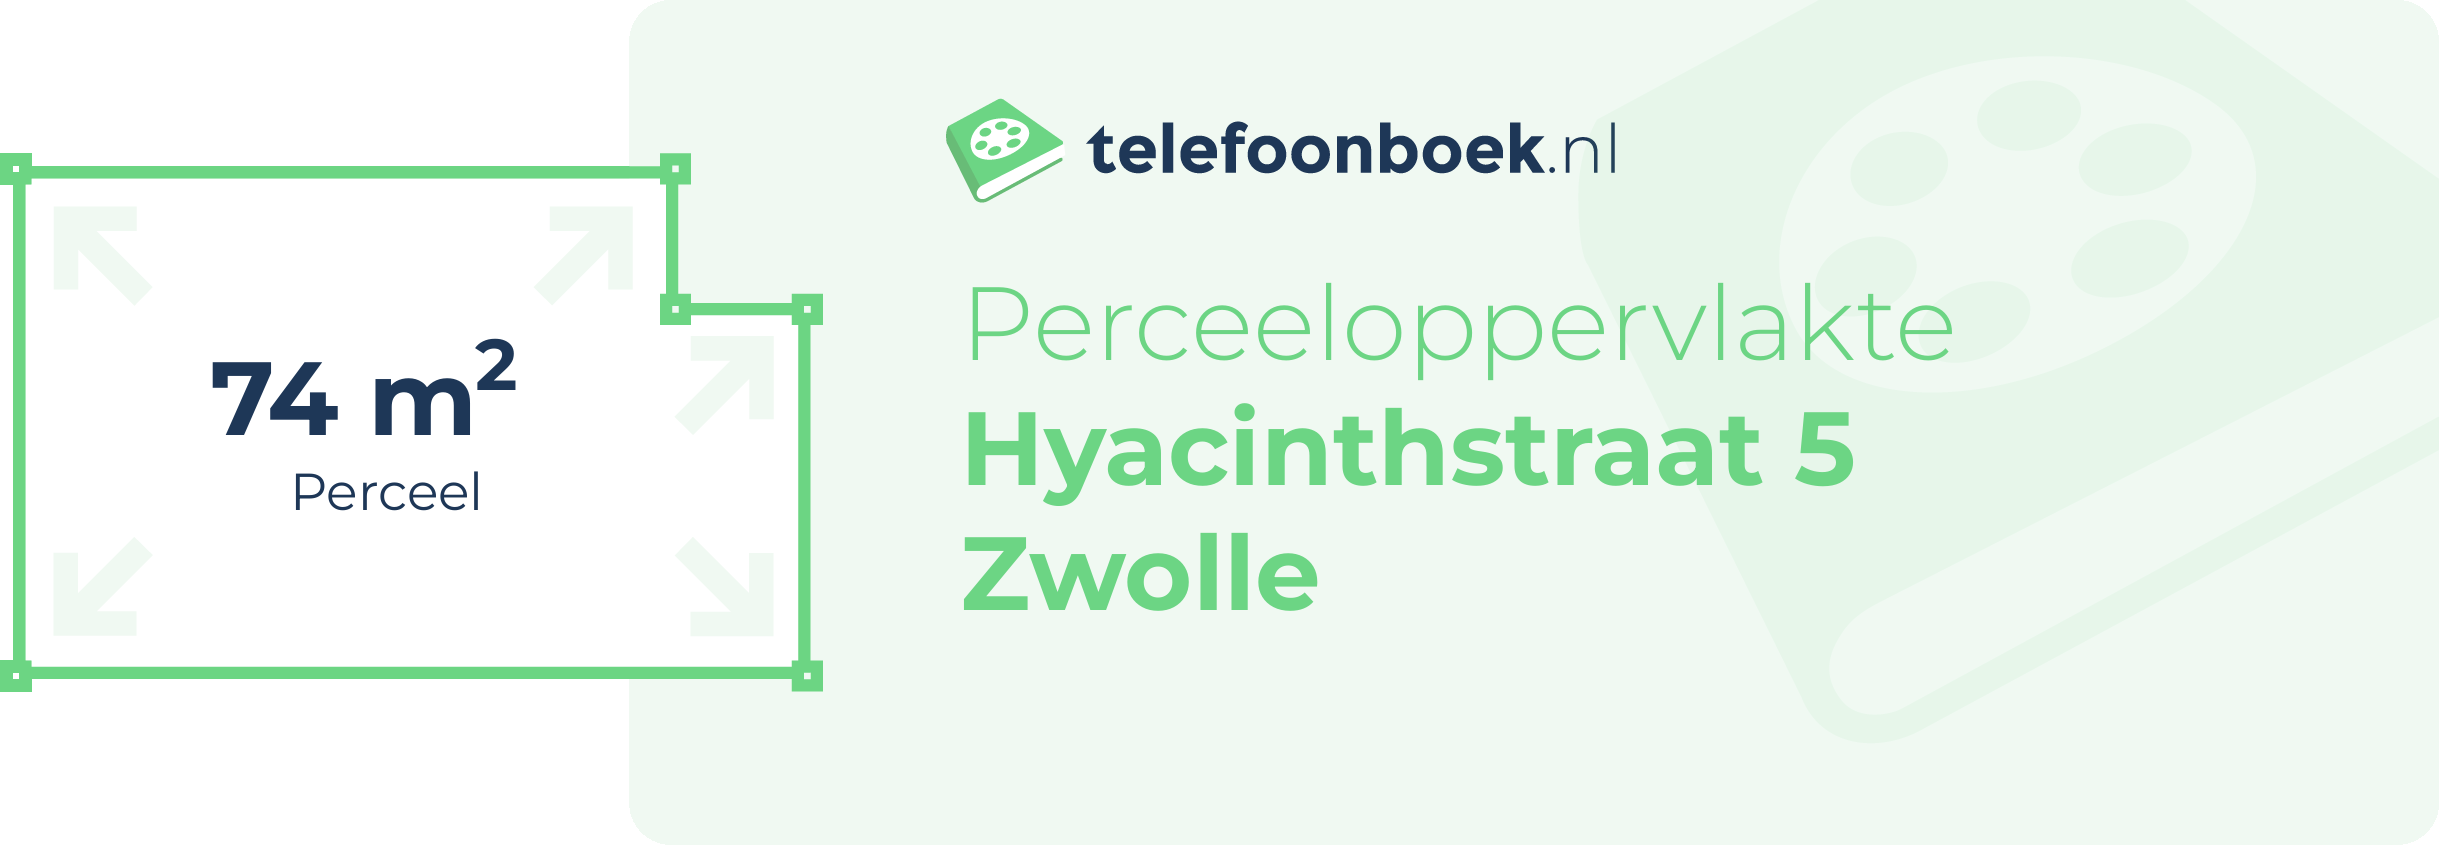 Perceeloppervlakte Hyacinthstraat 5 Zwolle